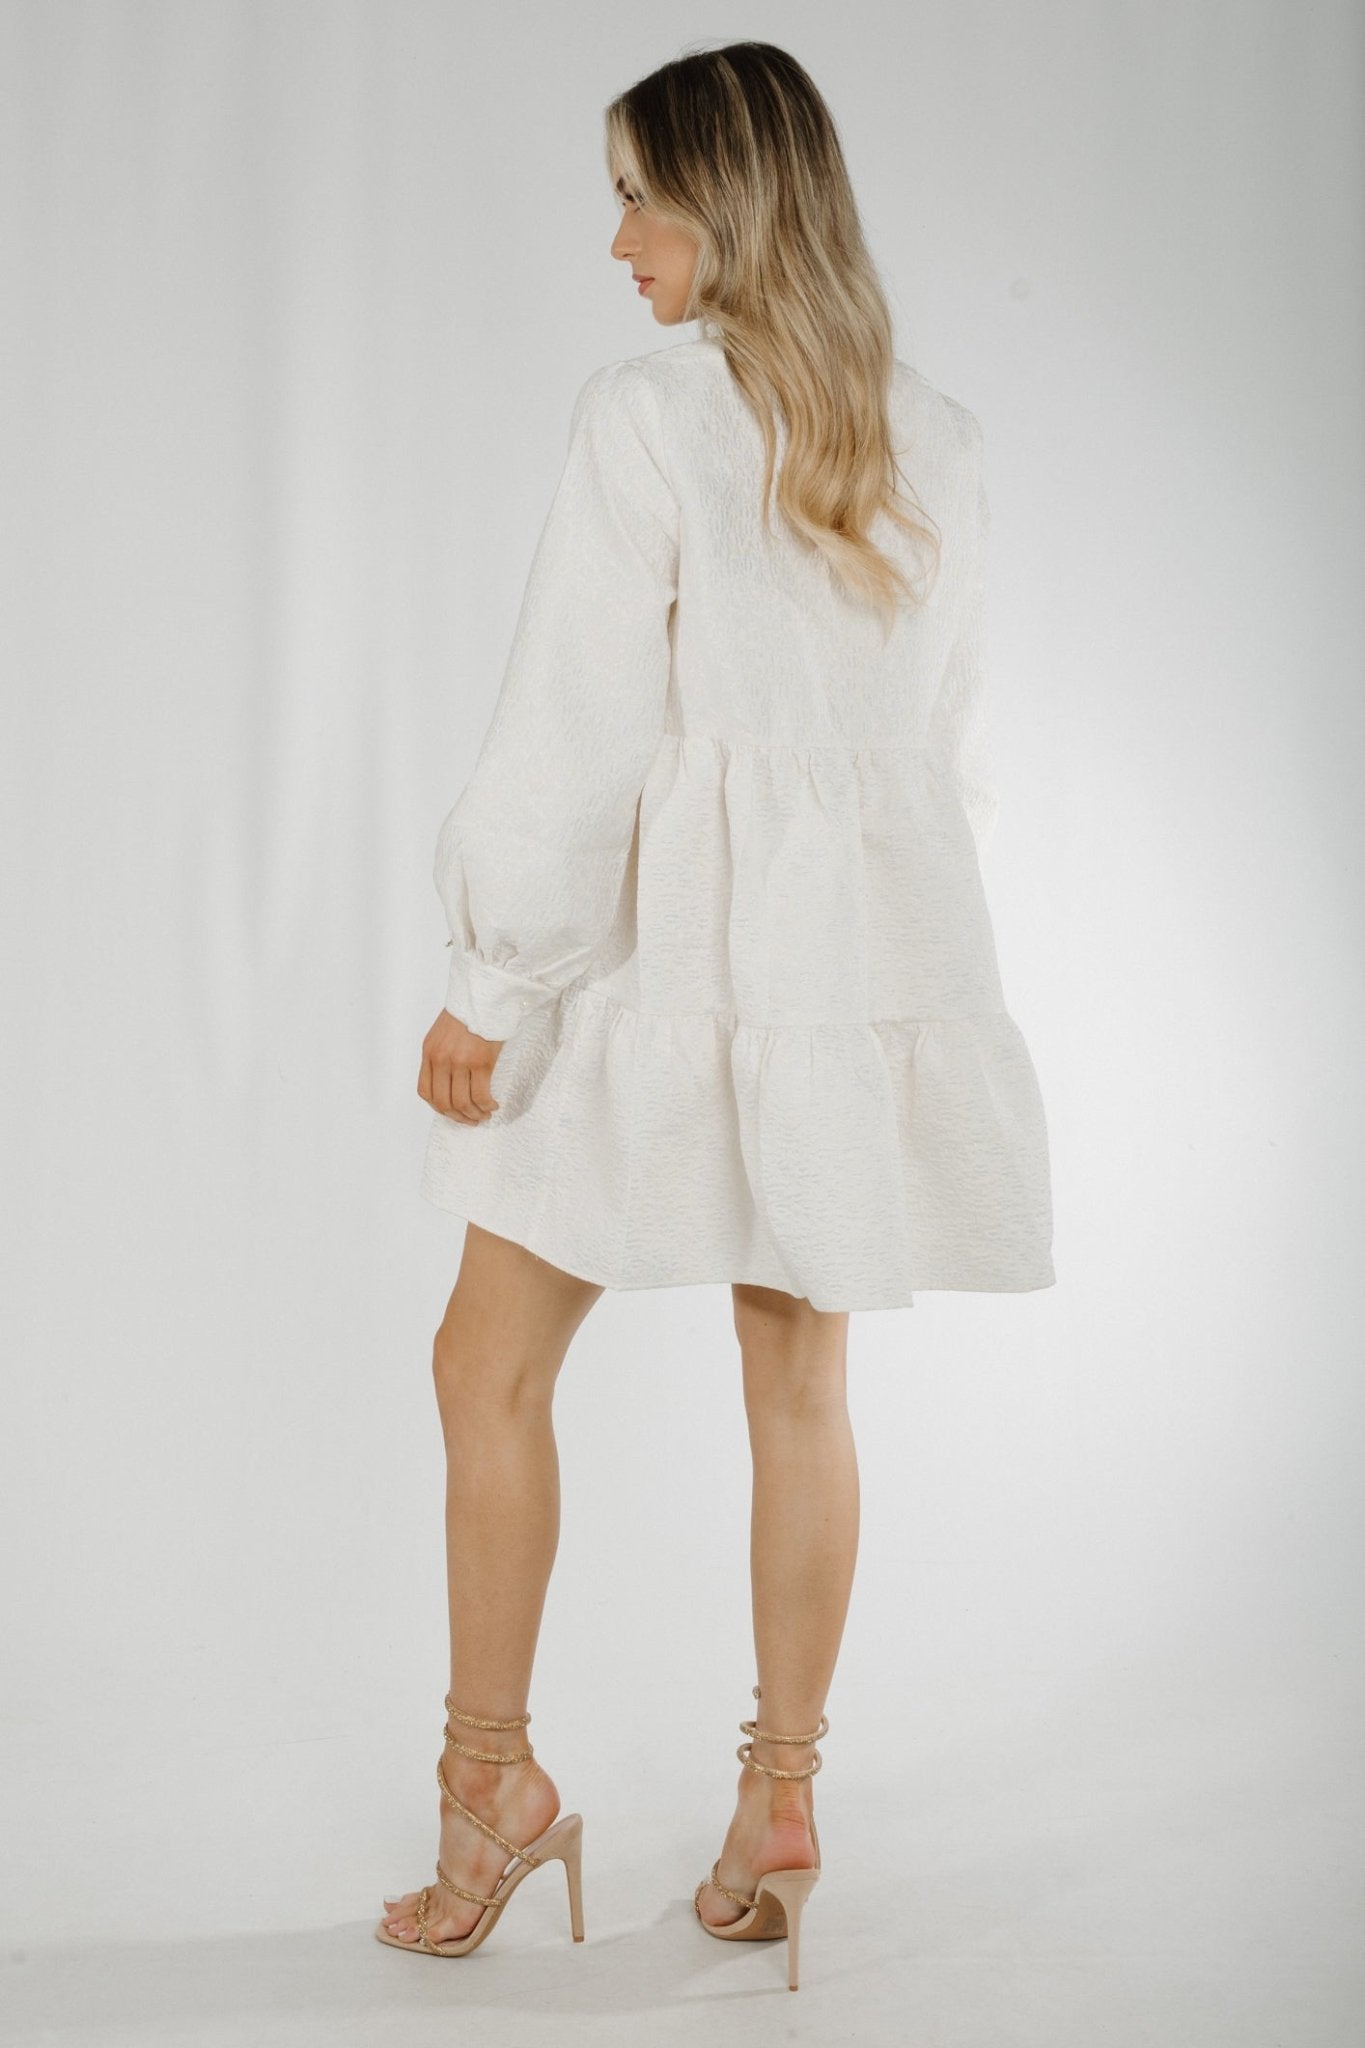 Jasmine Tiered Embroidery Dress In White - The Walk in Wardrobe